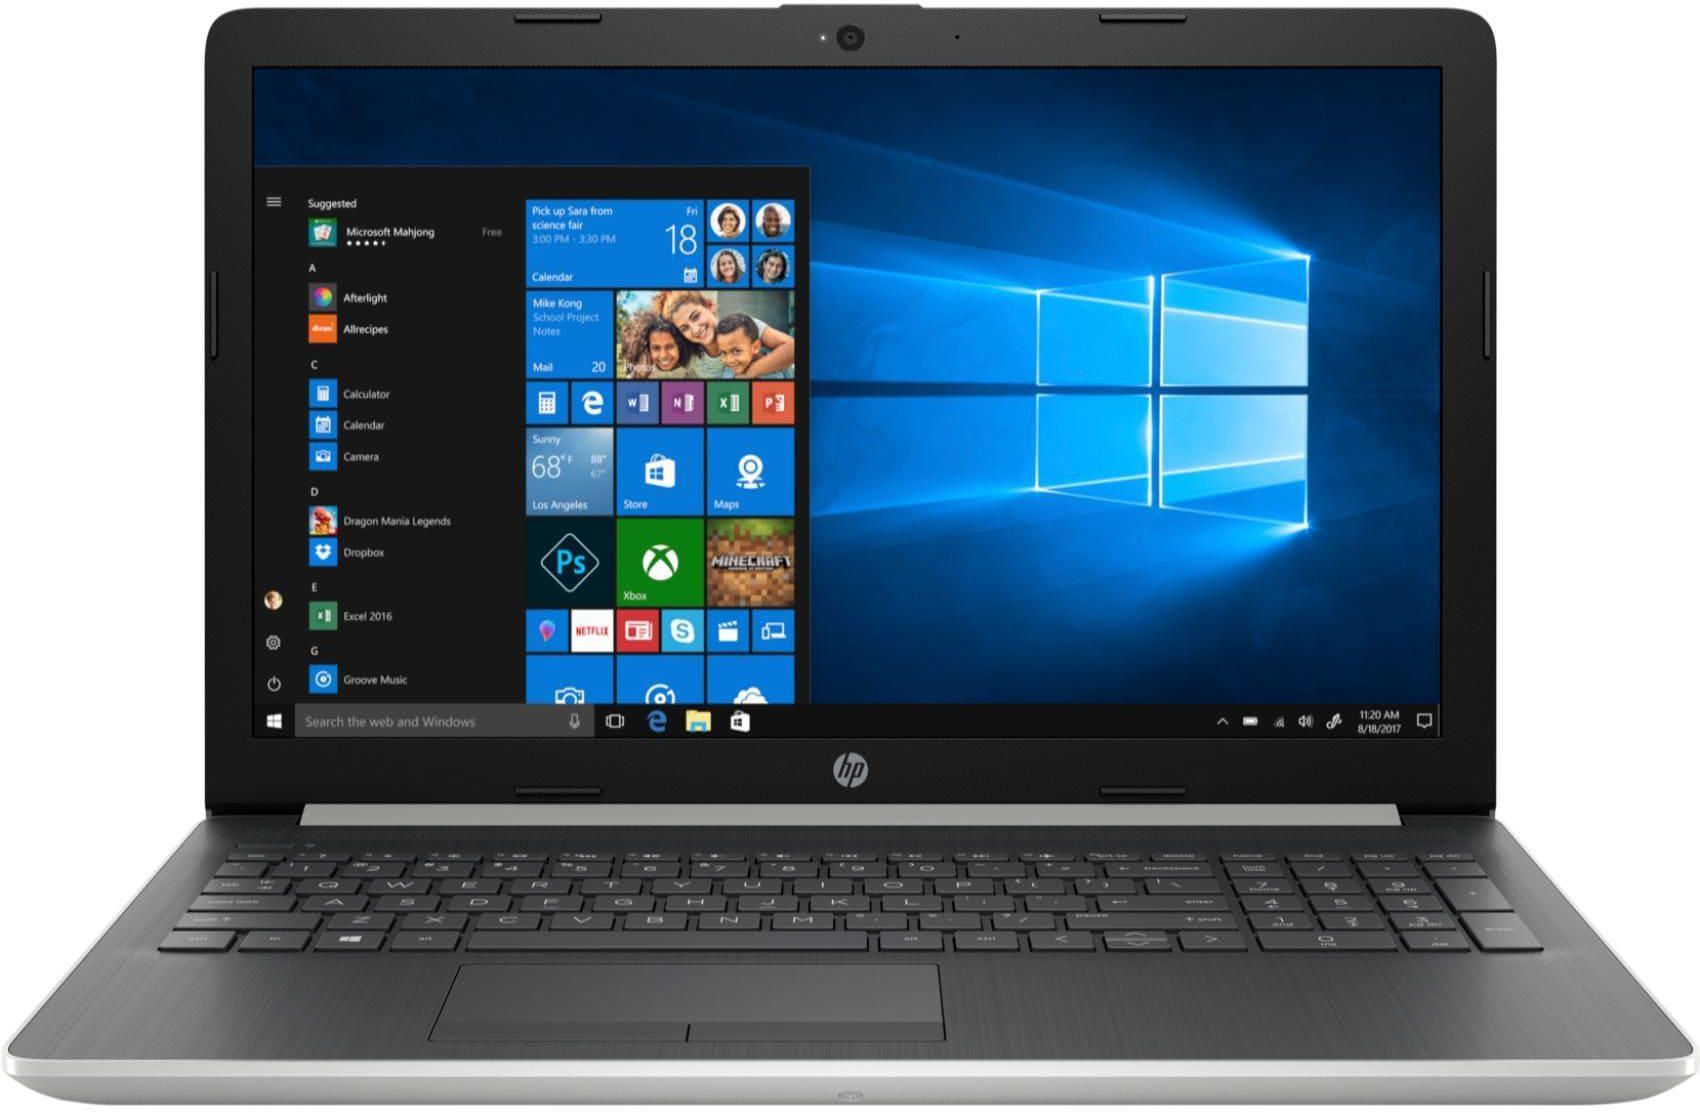 HP Notebook 15da0130 Celeron N4000 4GB RAM 1TB Hard Disk 15.6"" Screen